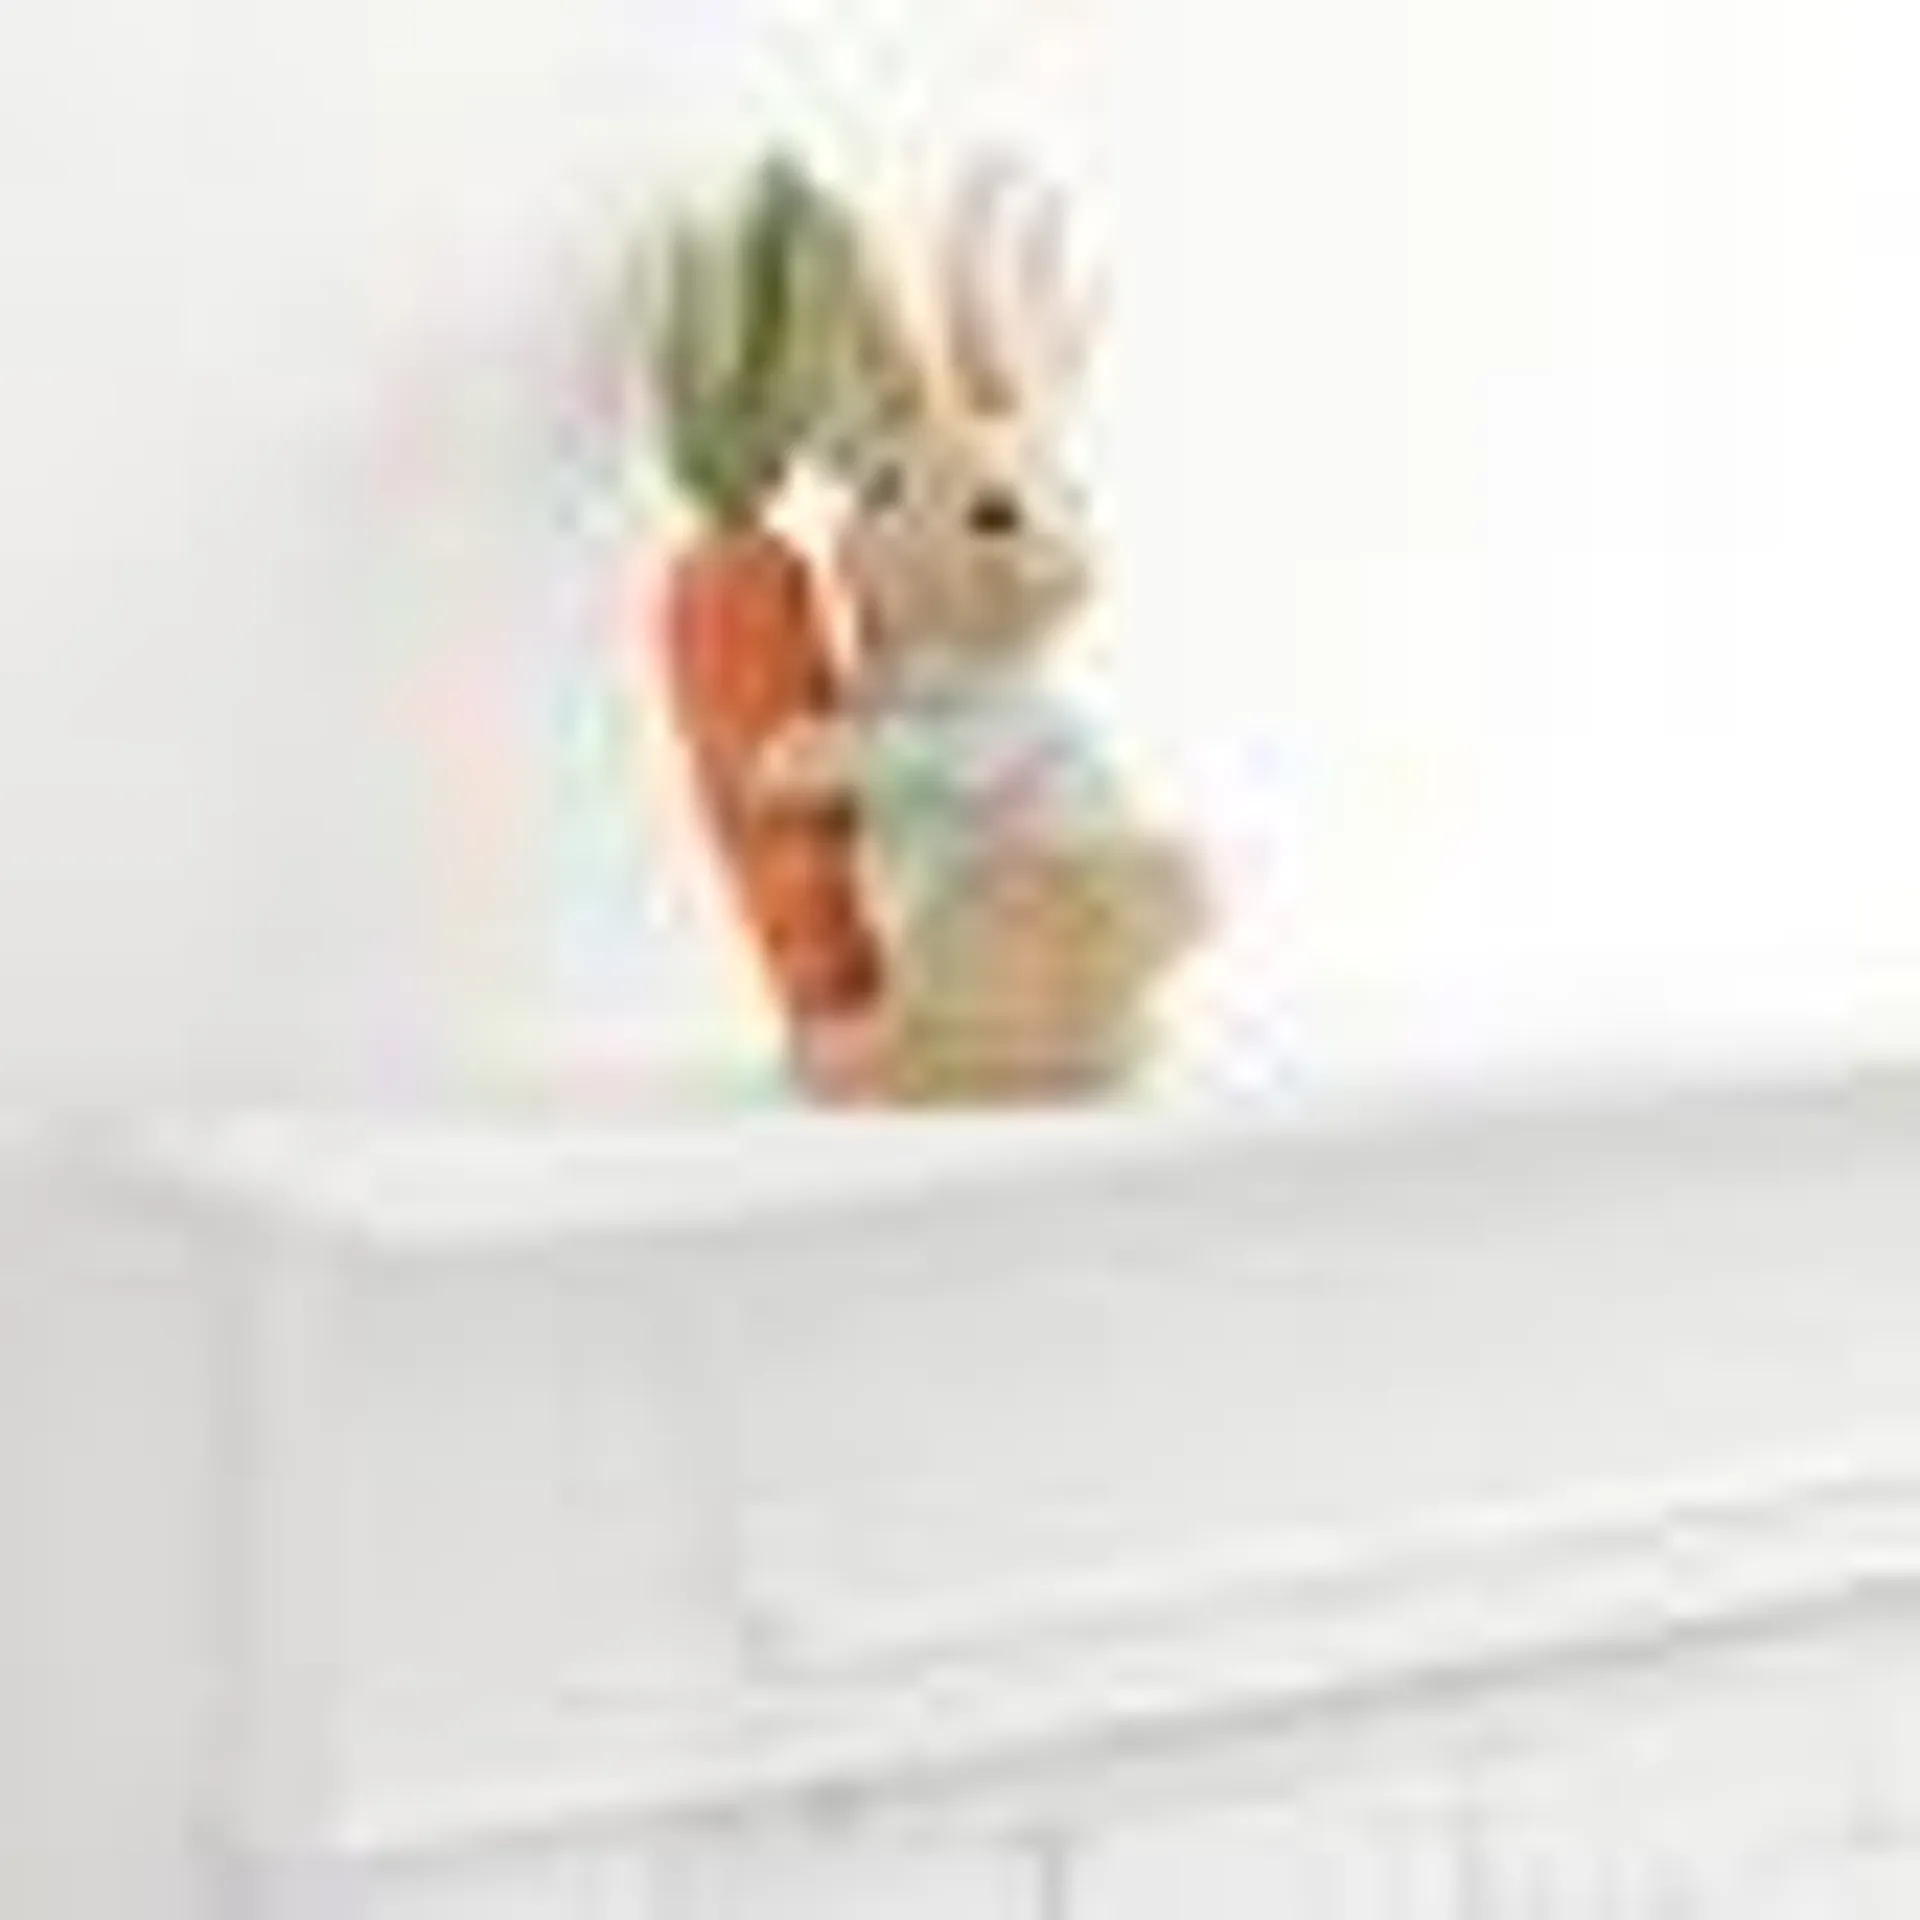 Natural Fiber Garden Rabbit With Carrot Decor